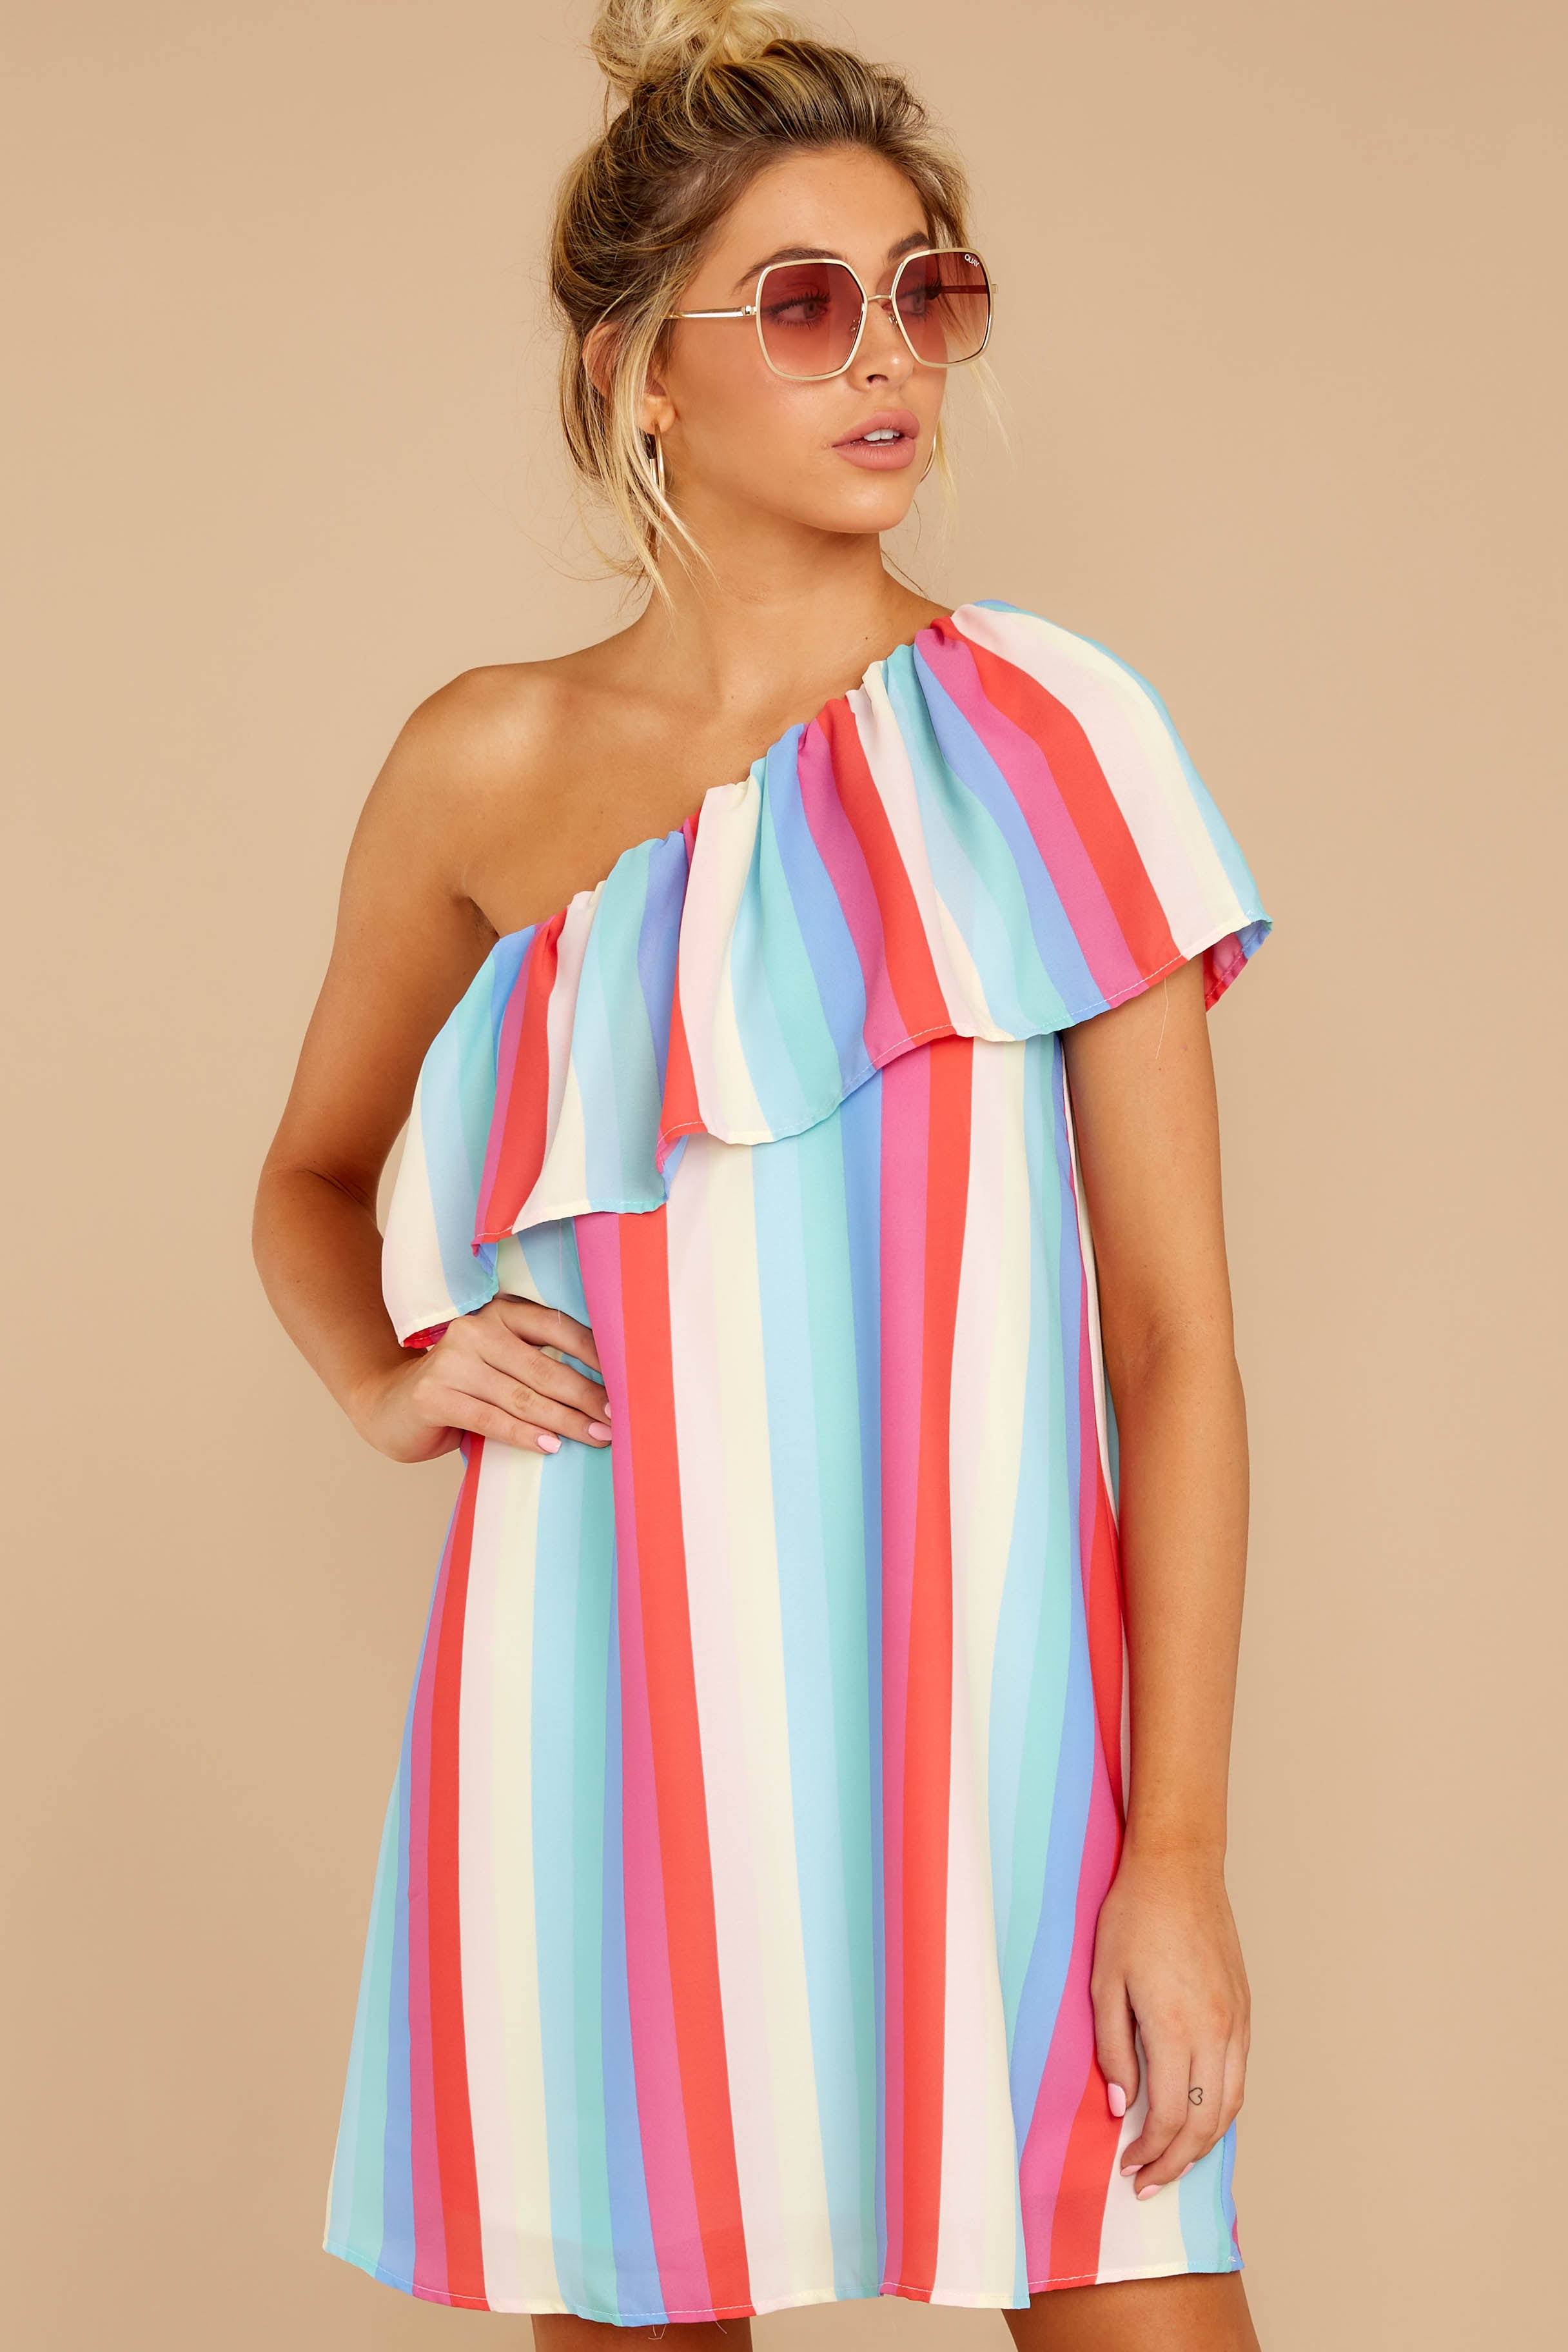 5 The Best View Pastel Rainbow Stripe One Shoulder Dress at reddress.com